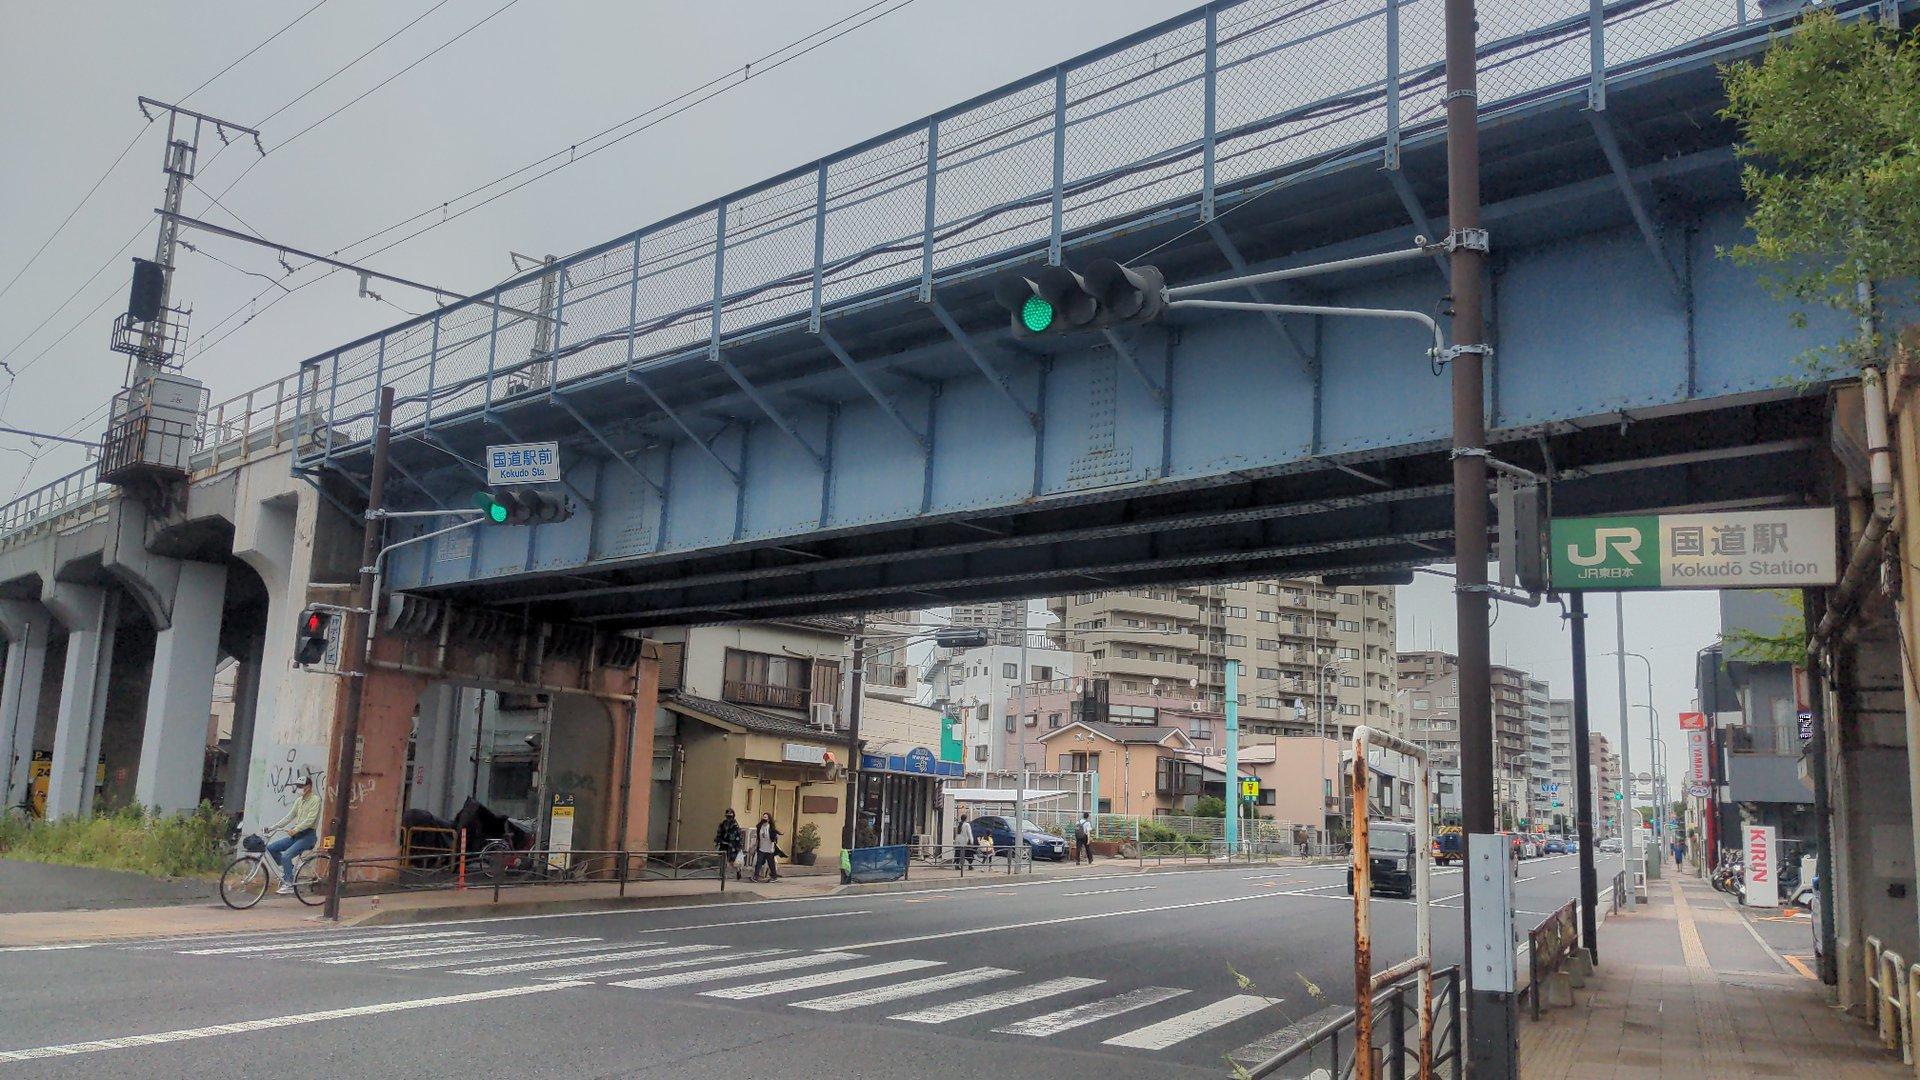 Kokudō Station (国道駅（こくどう）)